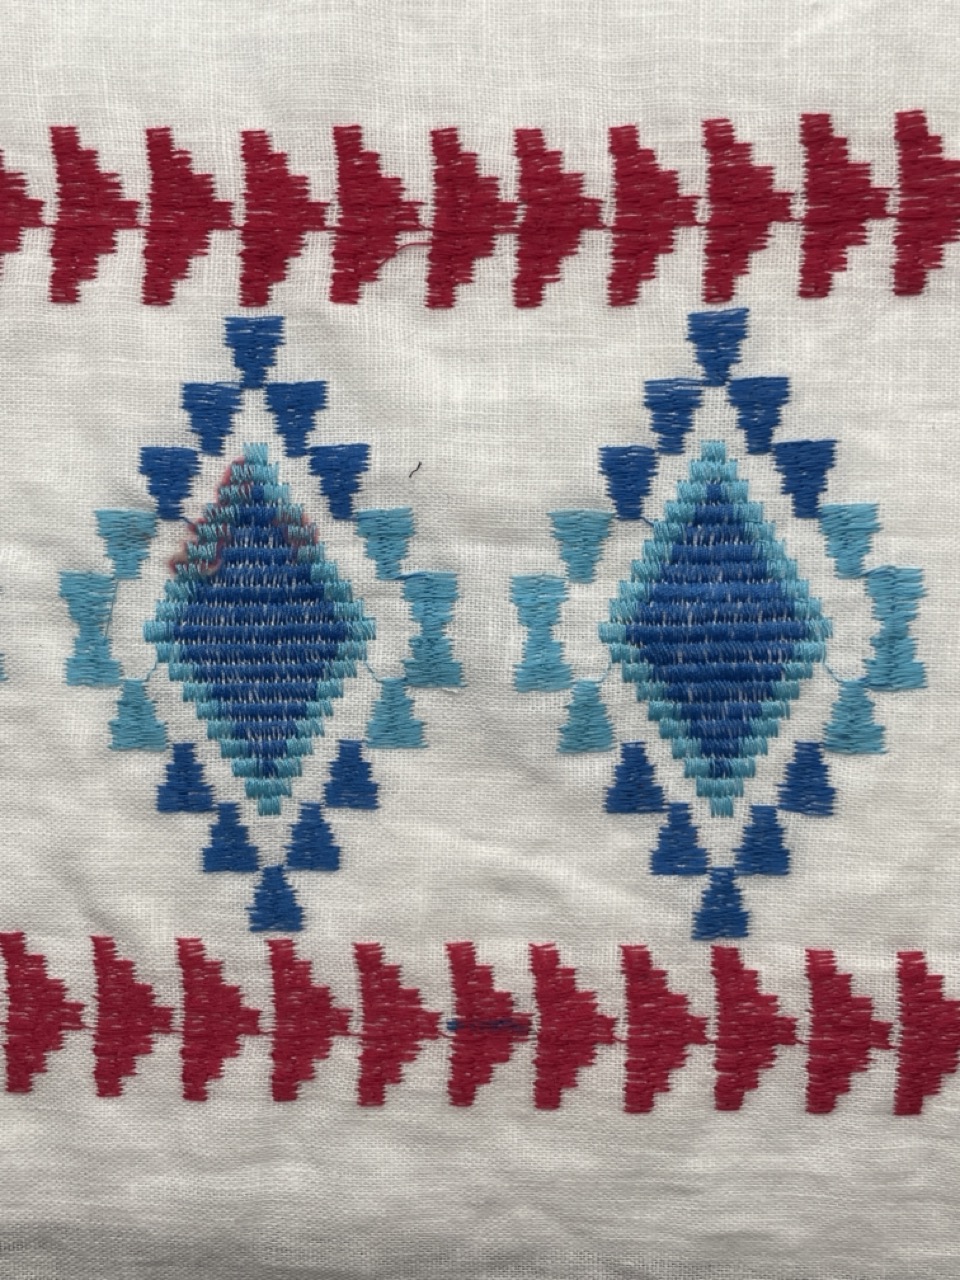 Triangular_border_embroidery